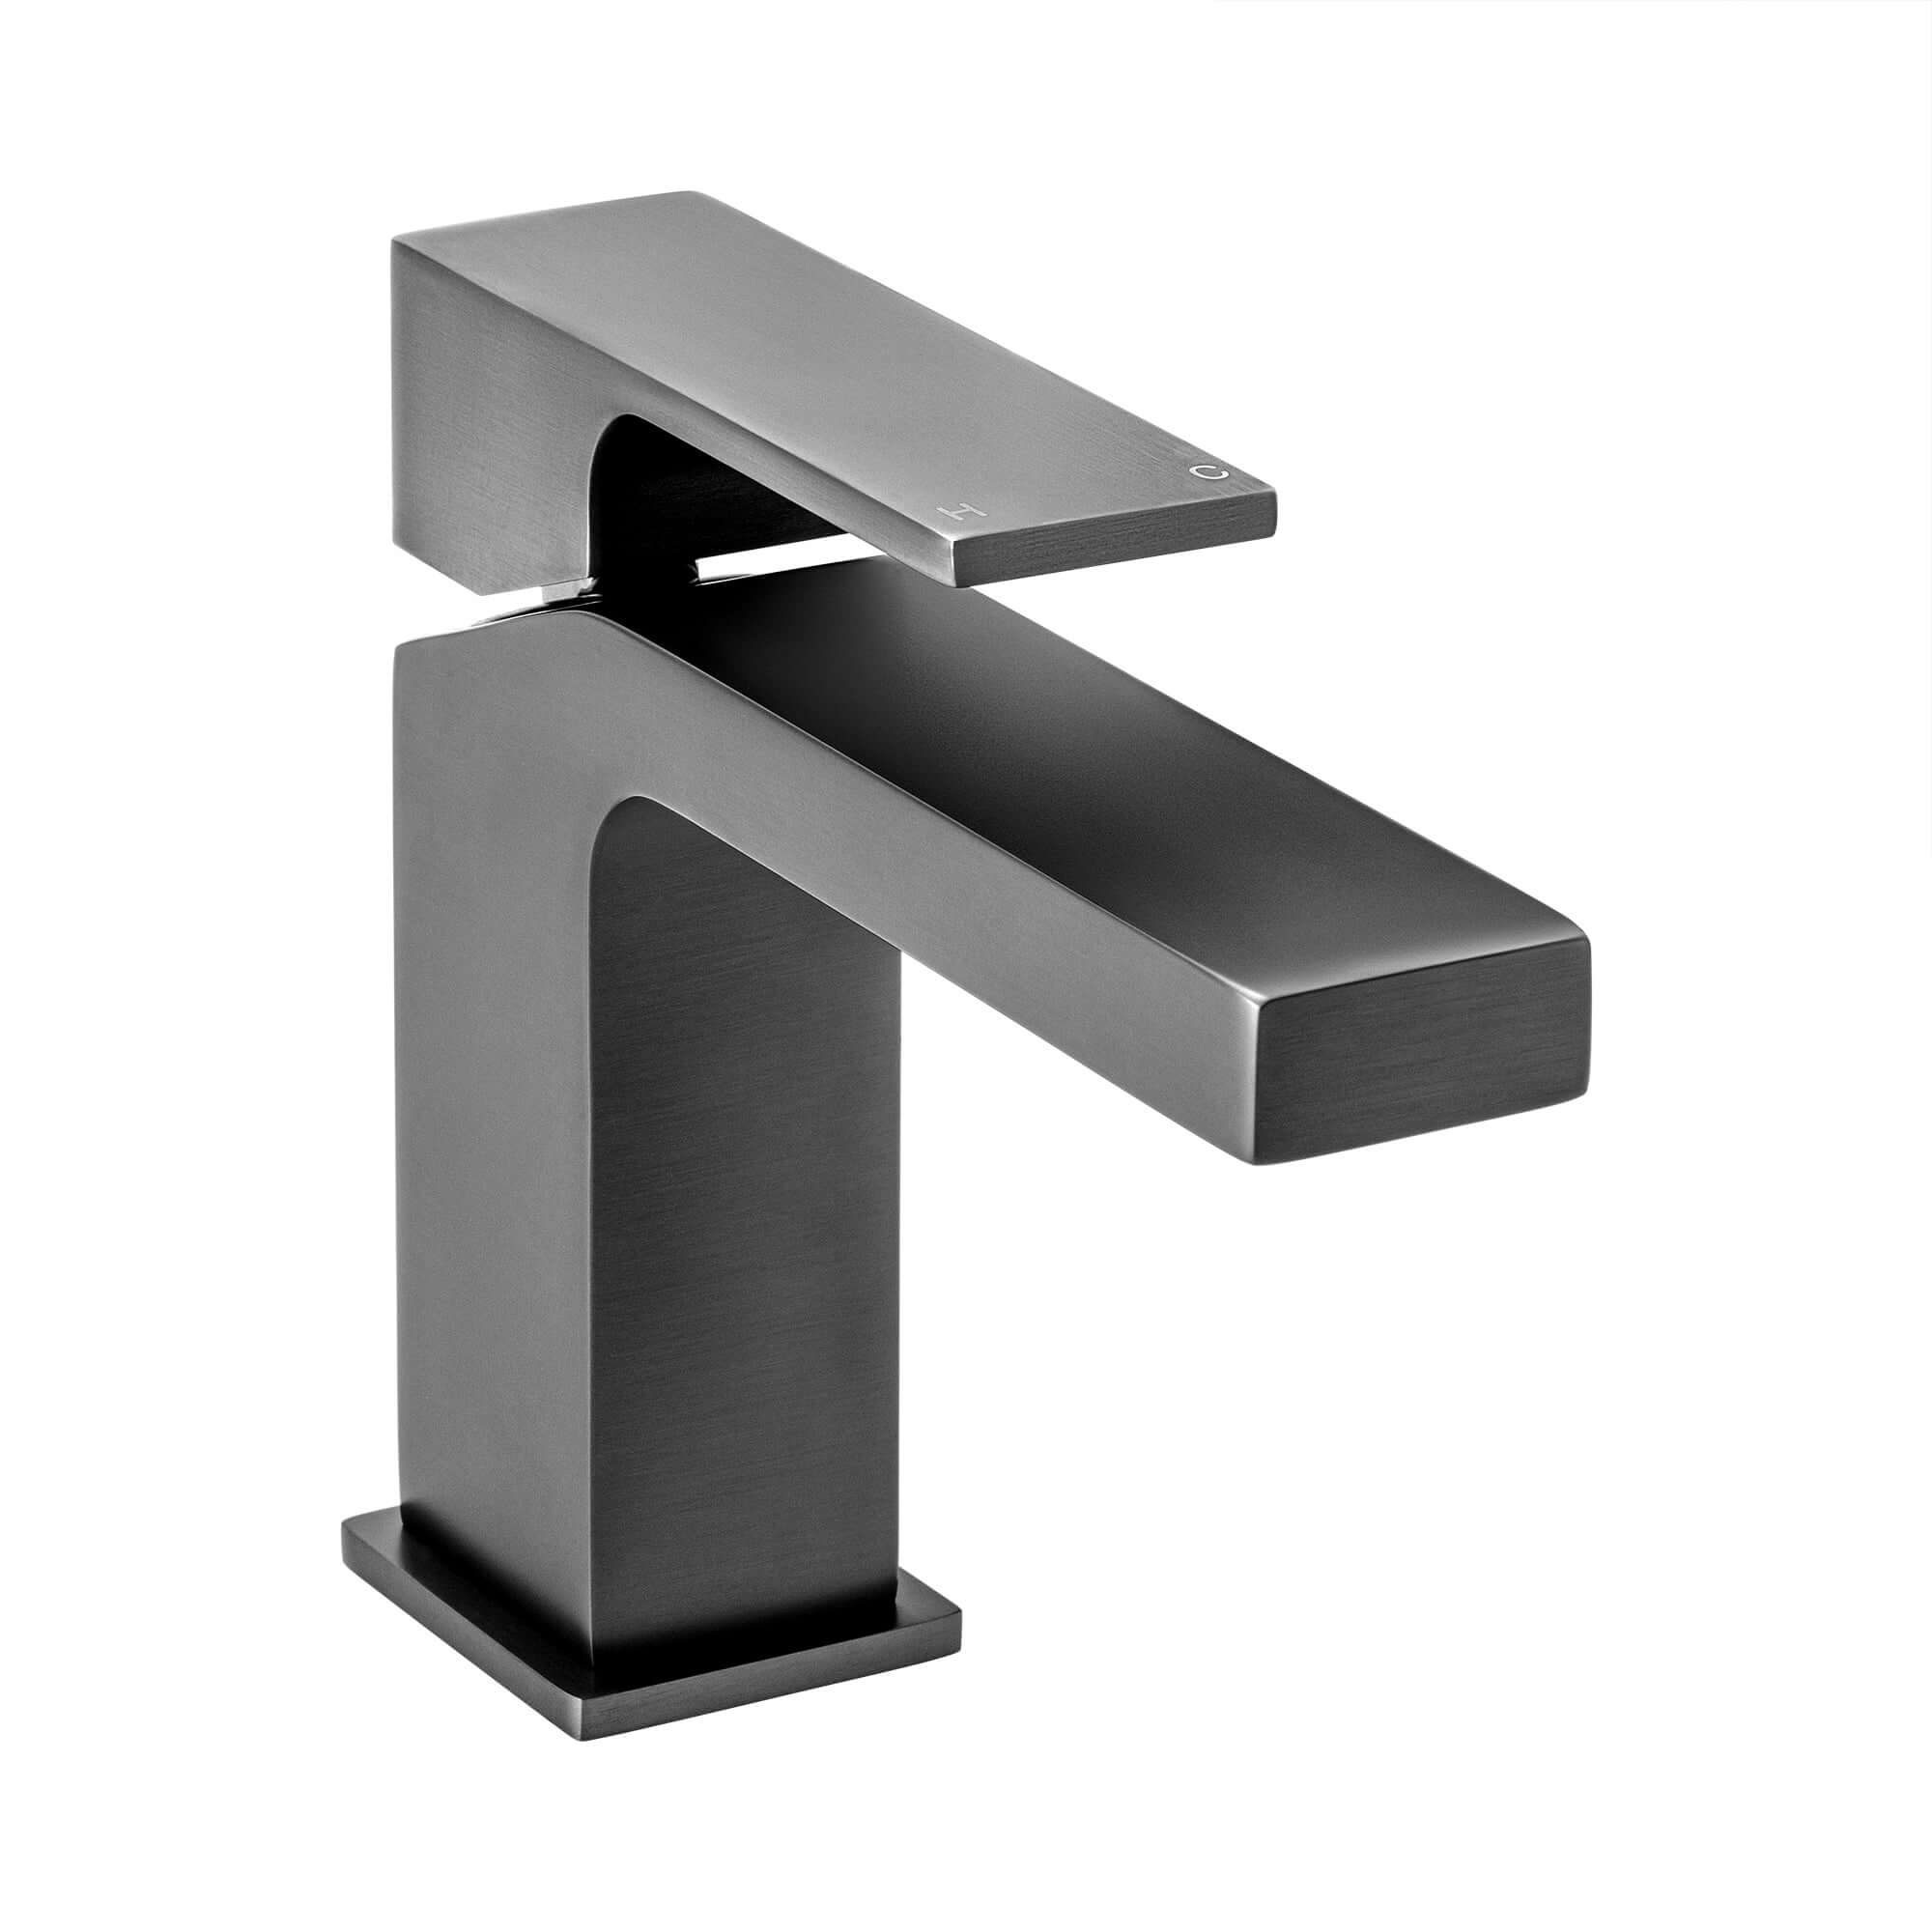 Athena contemporary square basin sink mixer tap - gunmetal grey black